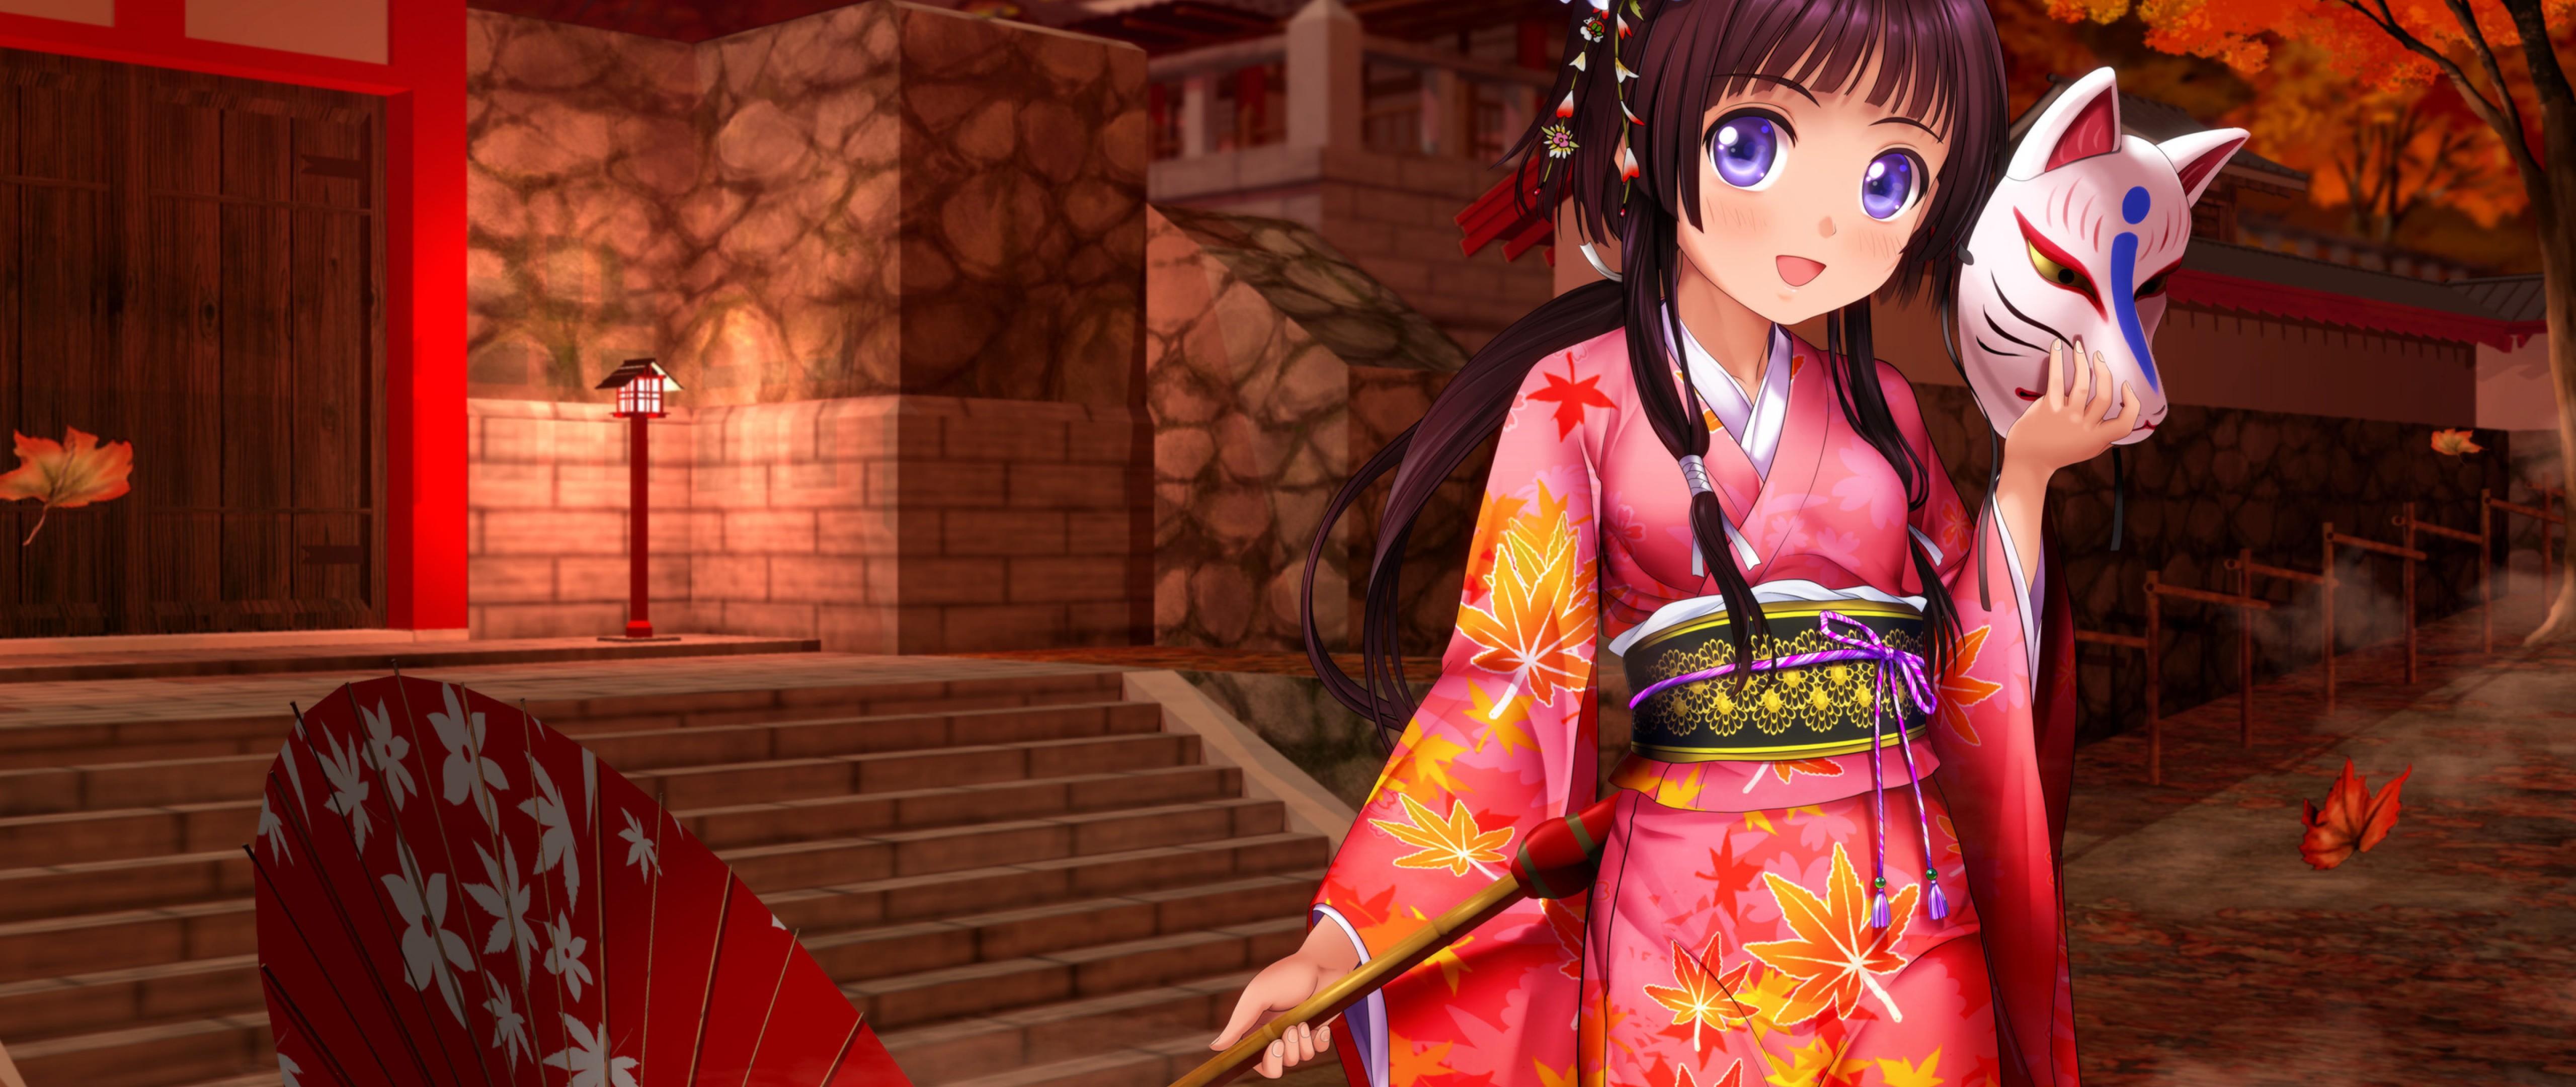 Anime Girl Kimono Umbrella Wallpaper For Desktop And Mobiles 4k